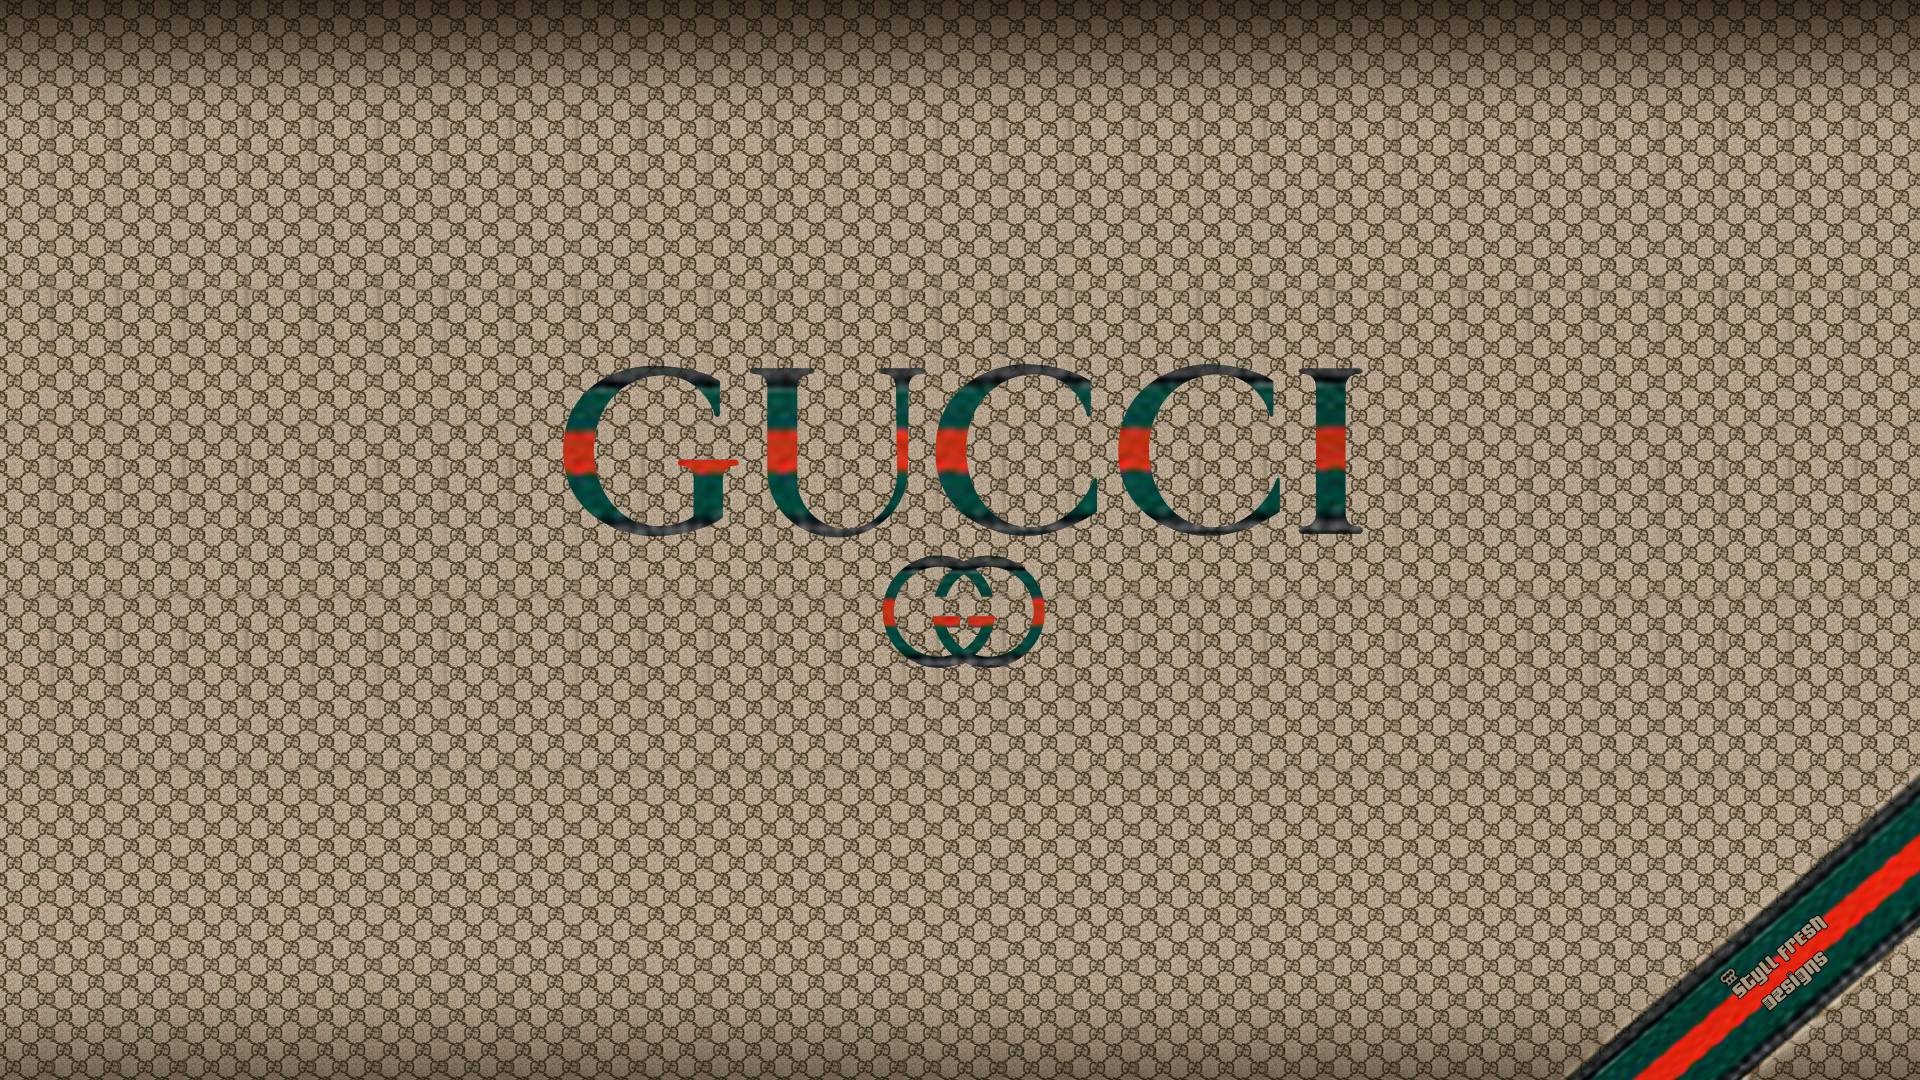 Cool Supreme Gucci Wallpapers - Top Free Cool Supreme Gucci